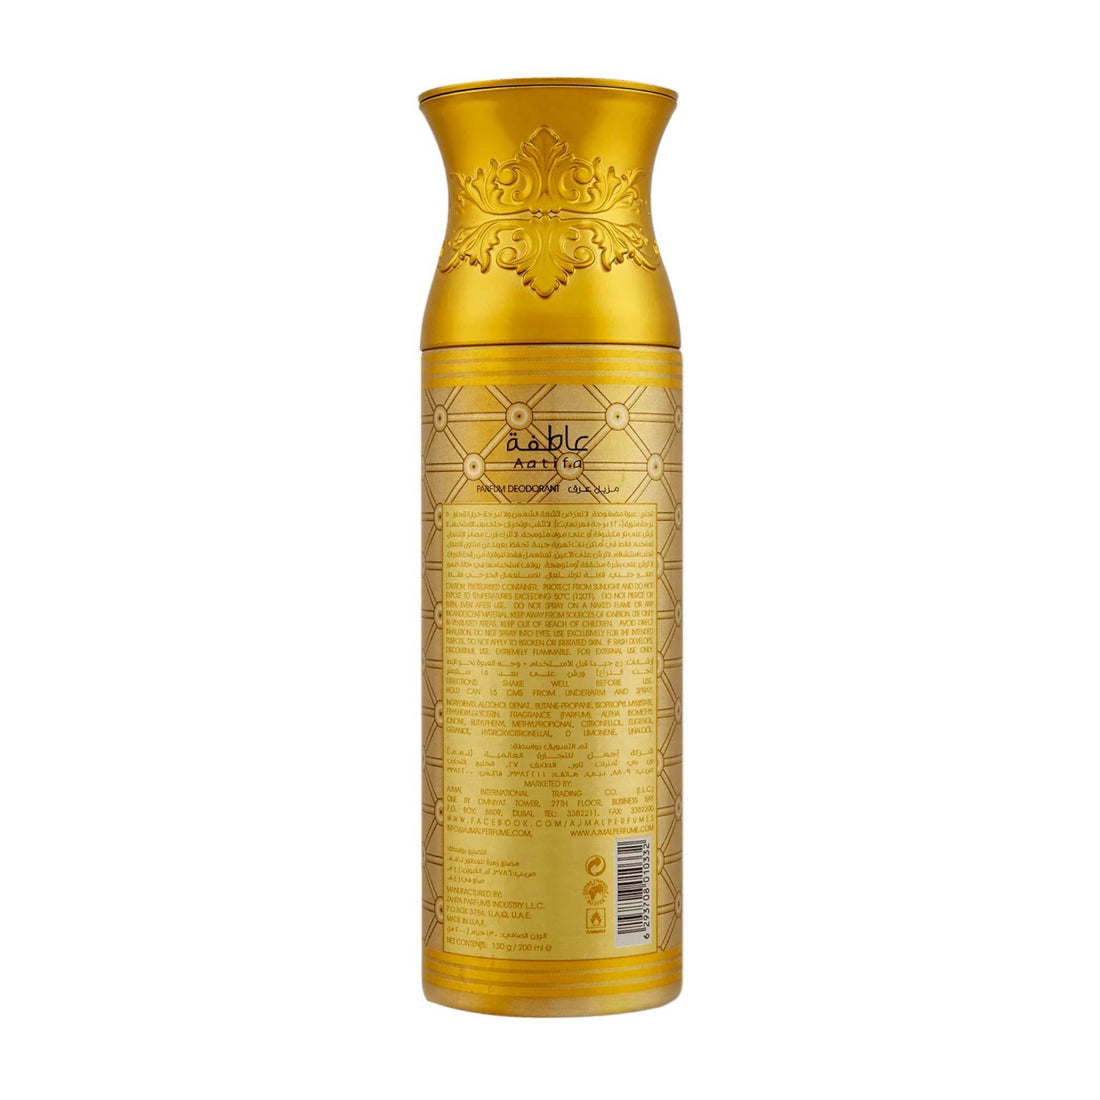 200ml bottle of Ajmal Aatifa Deodorant, showcasing its elegant design and unisex appeal.